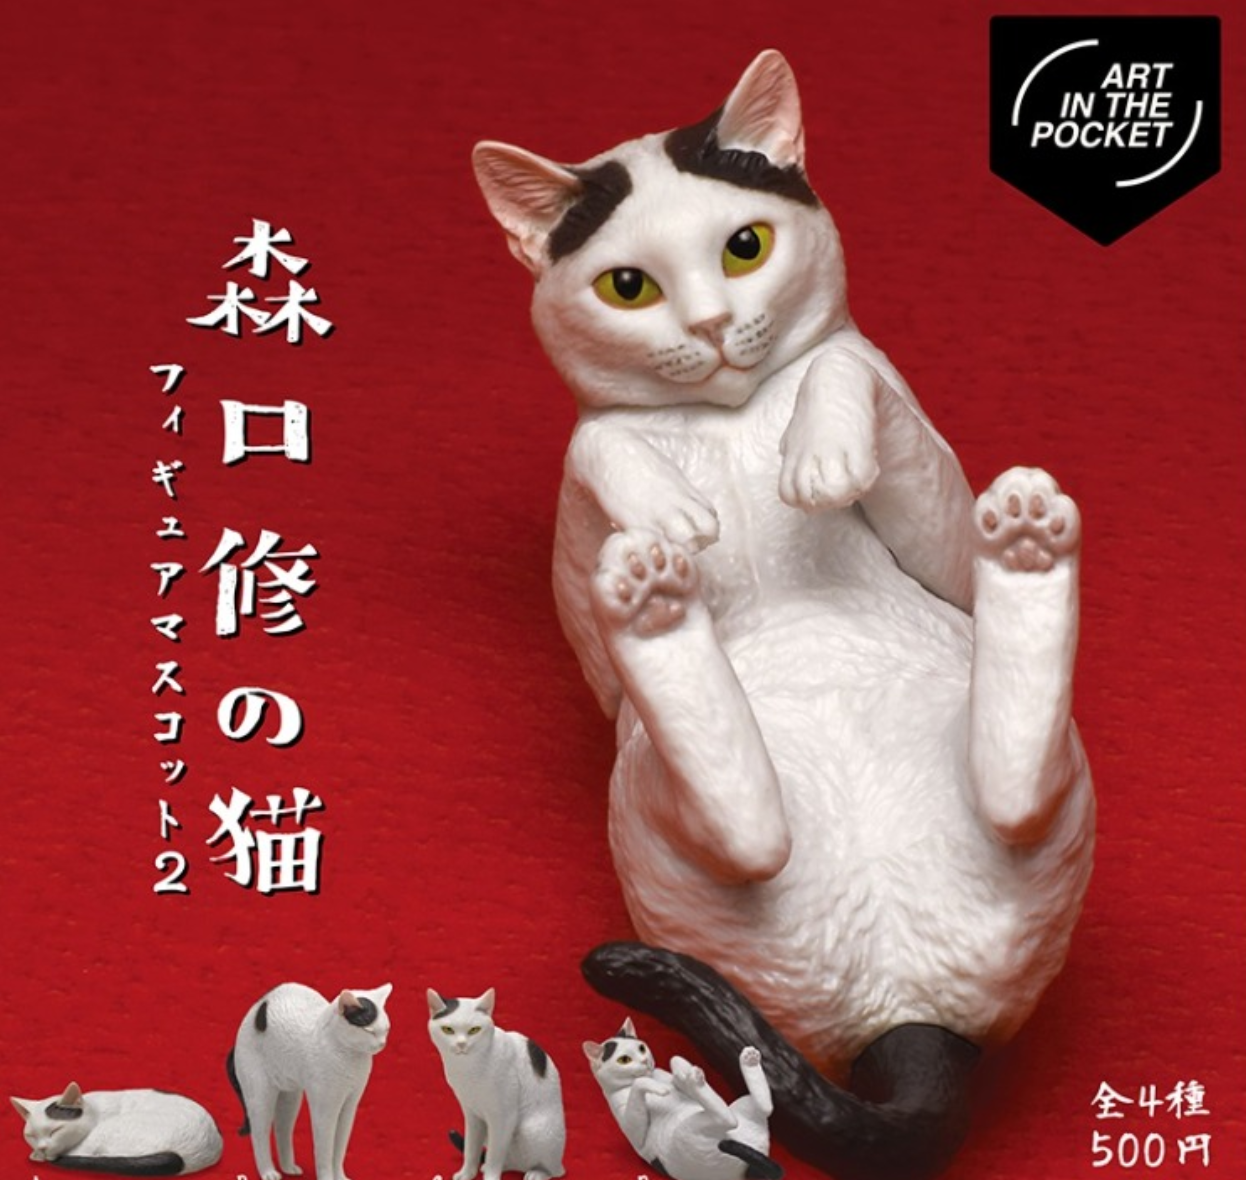 Kitan Club Art In The Pocket Gashapon Osamu Moriguchi Cat Part 2 4 Colletion Figure Set